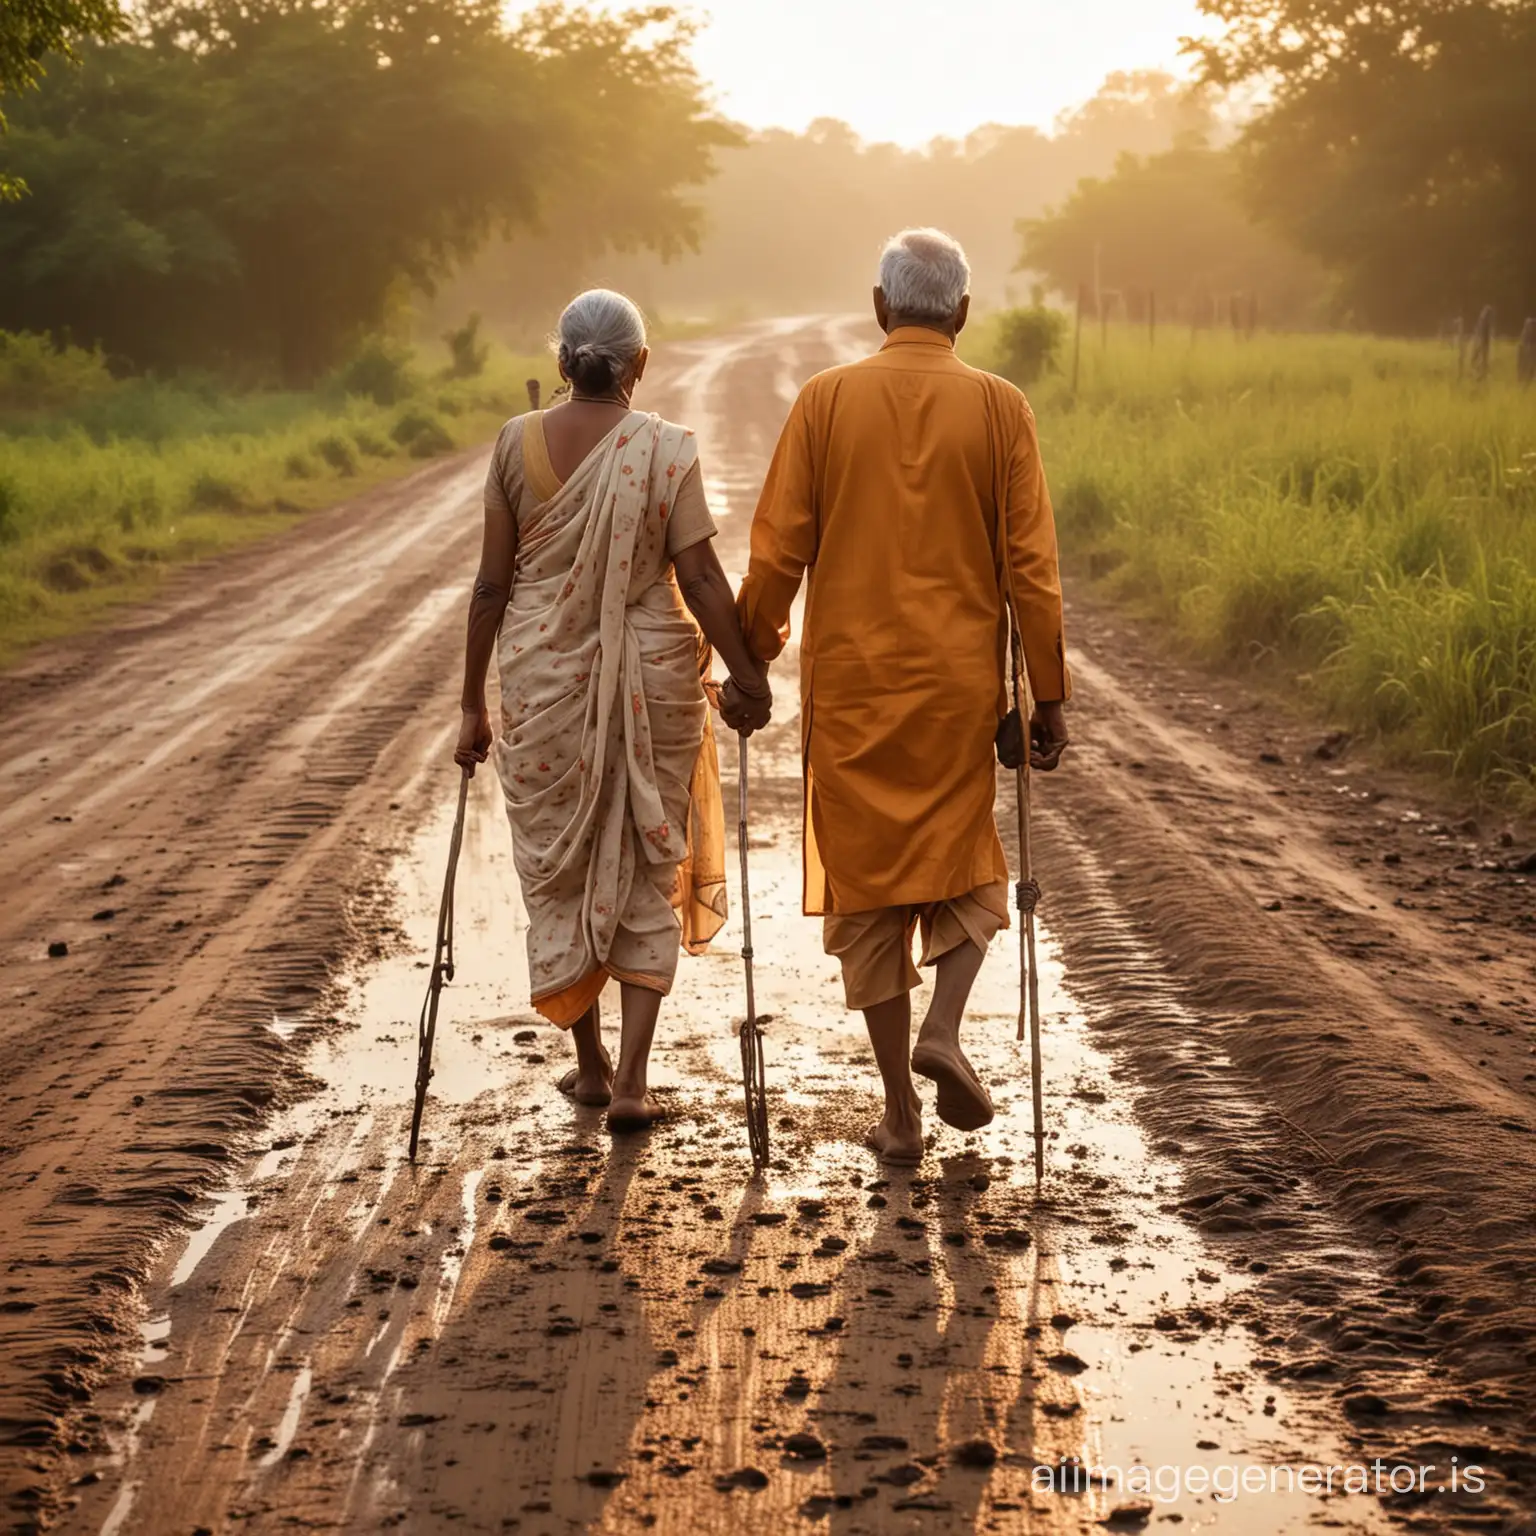 Elderly-Indian-Couple-Strolling-on-Village-Path-at-Dusk